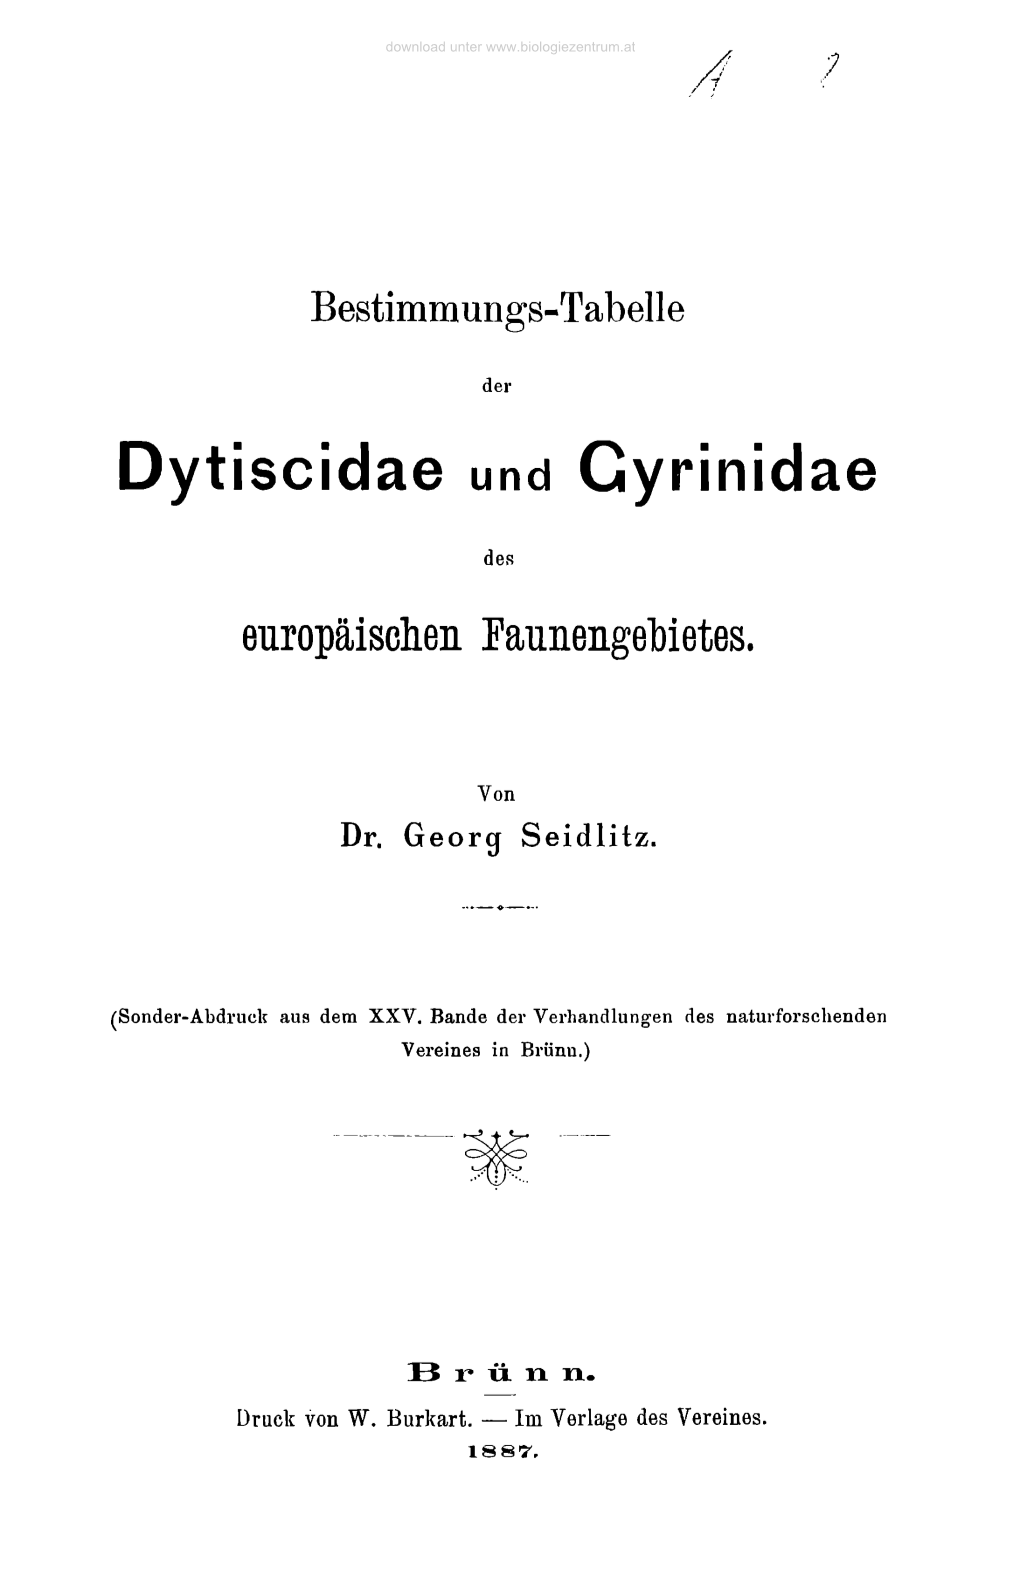 Dytiscidae Und Gyrinidae